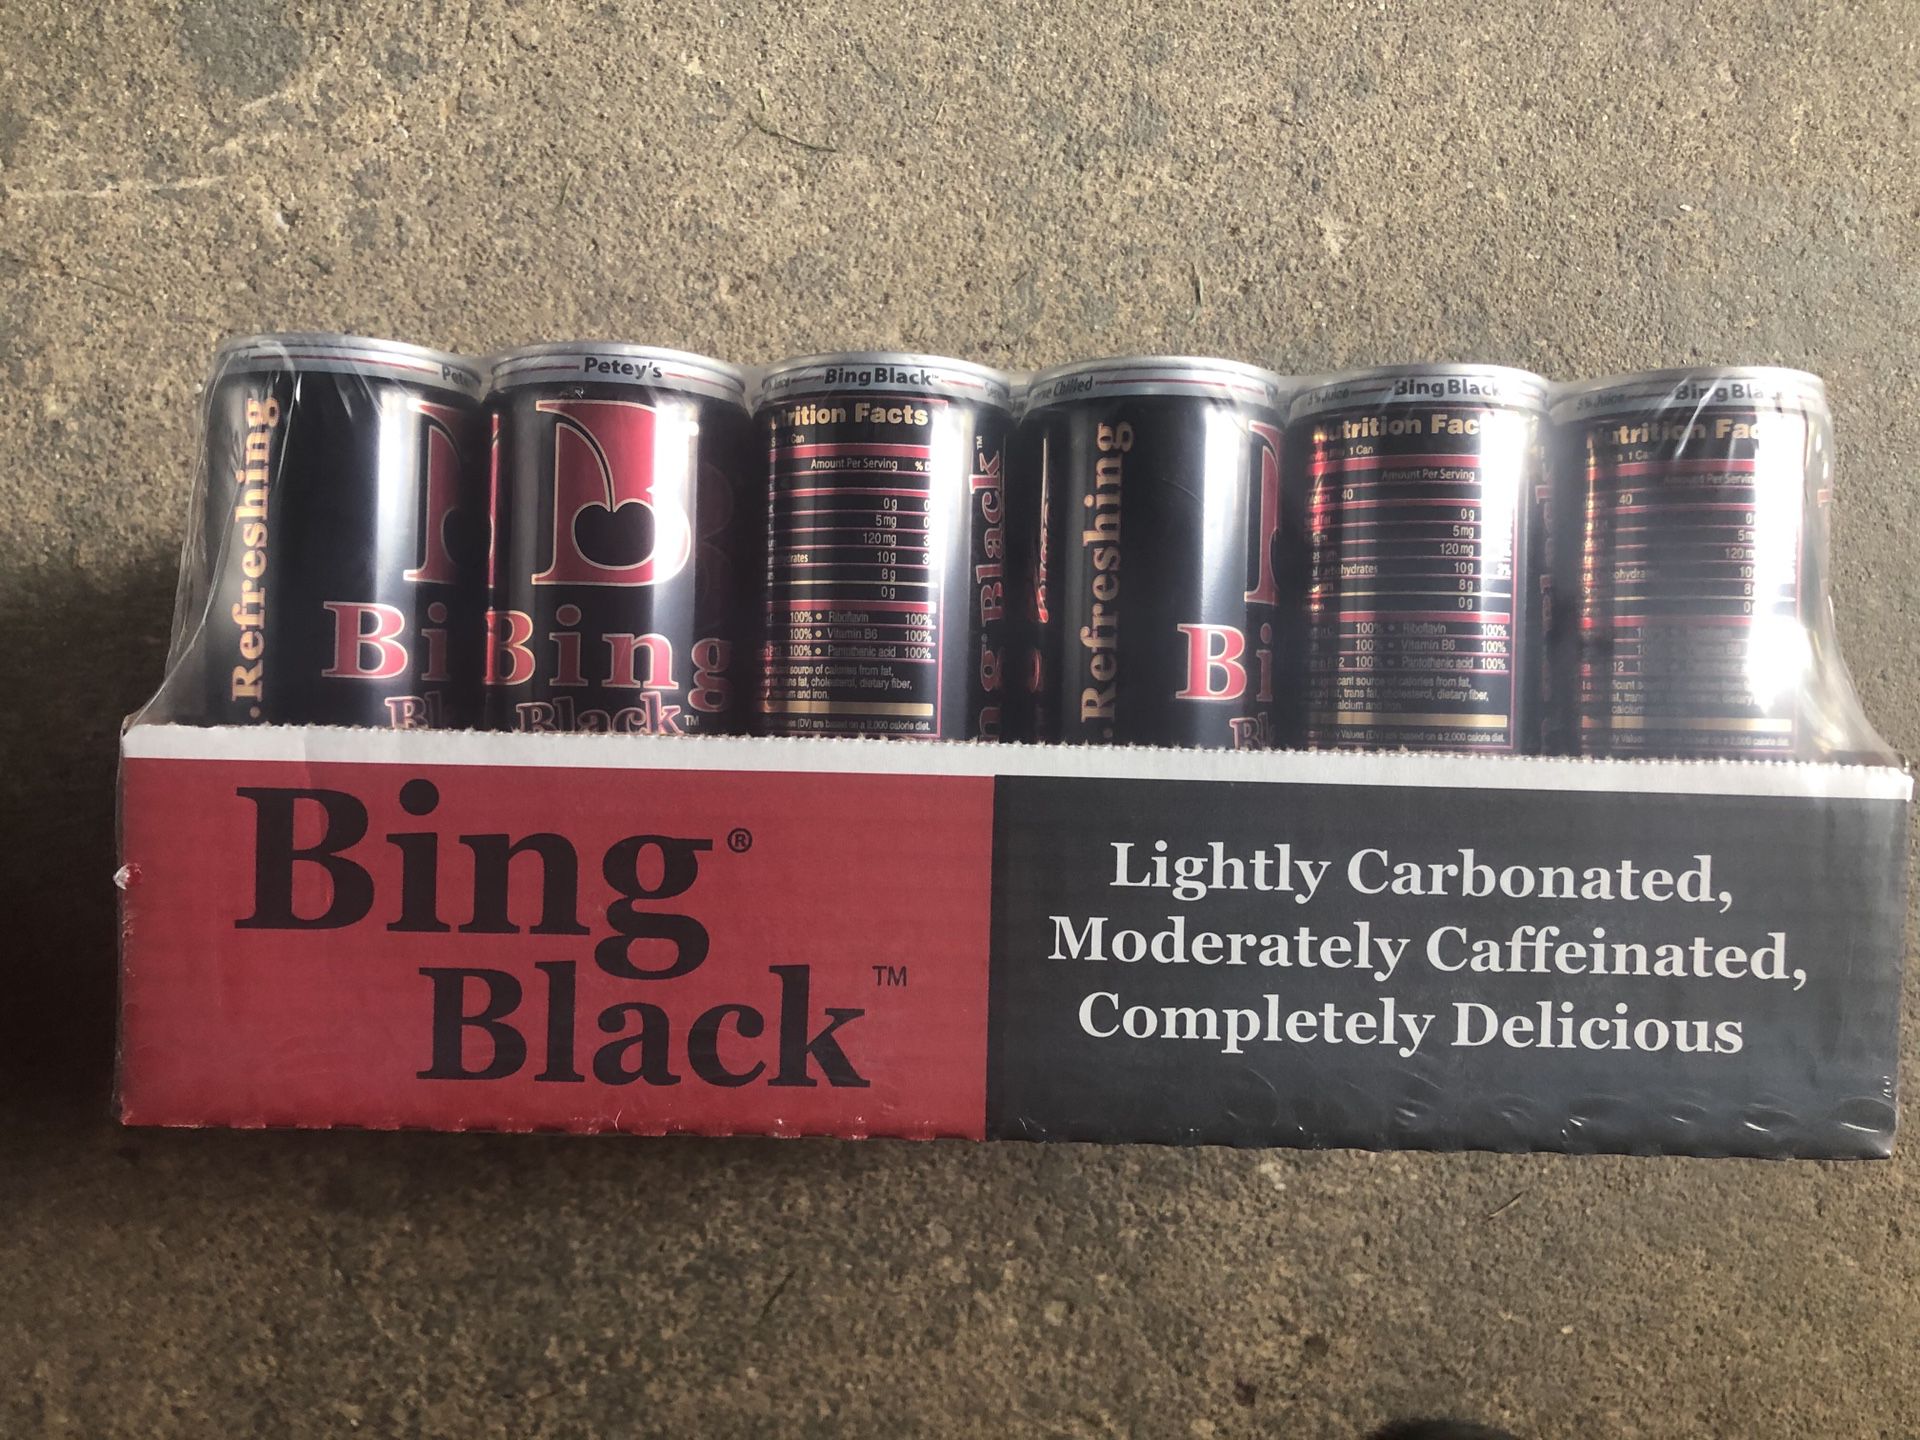 Bing black drinks